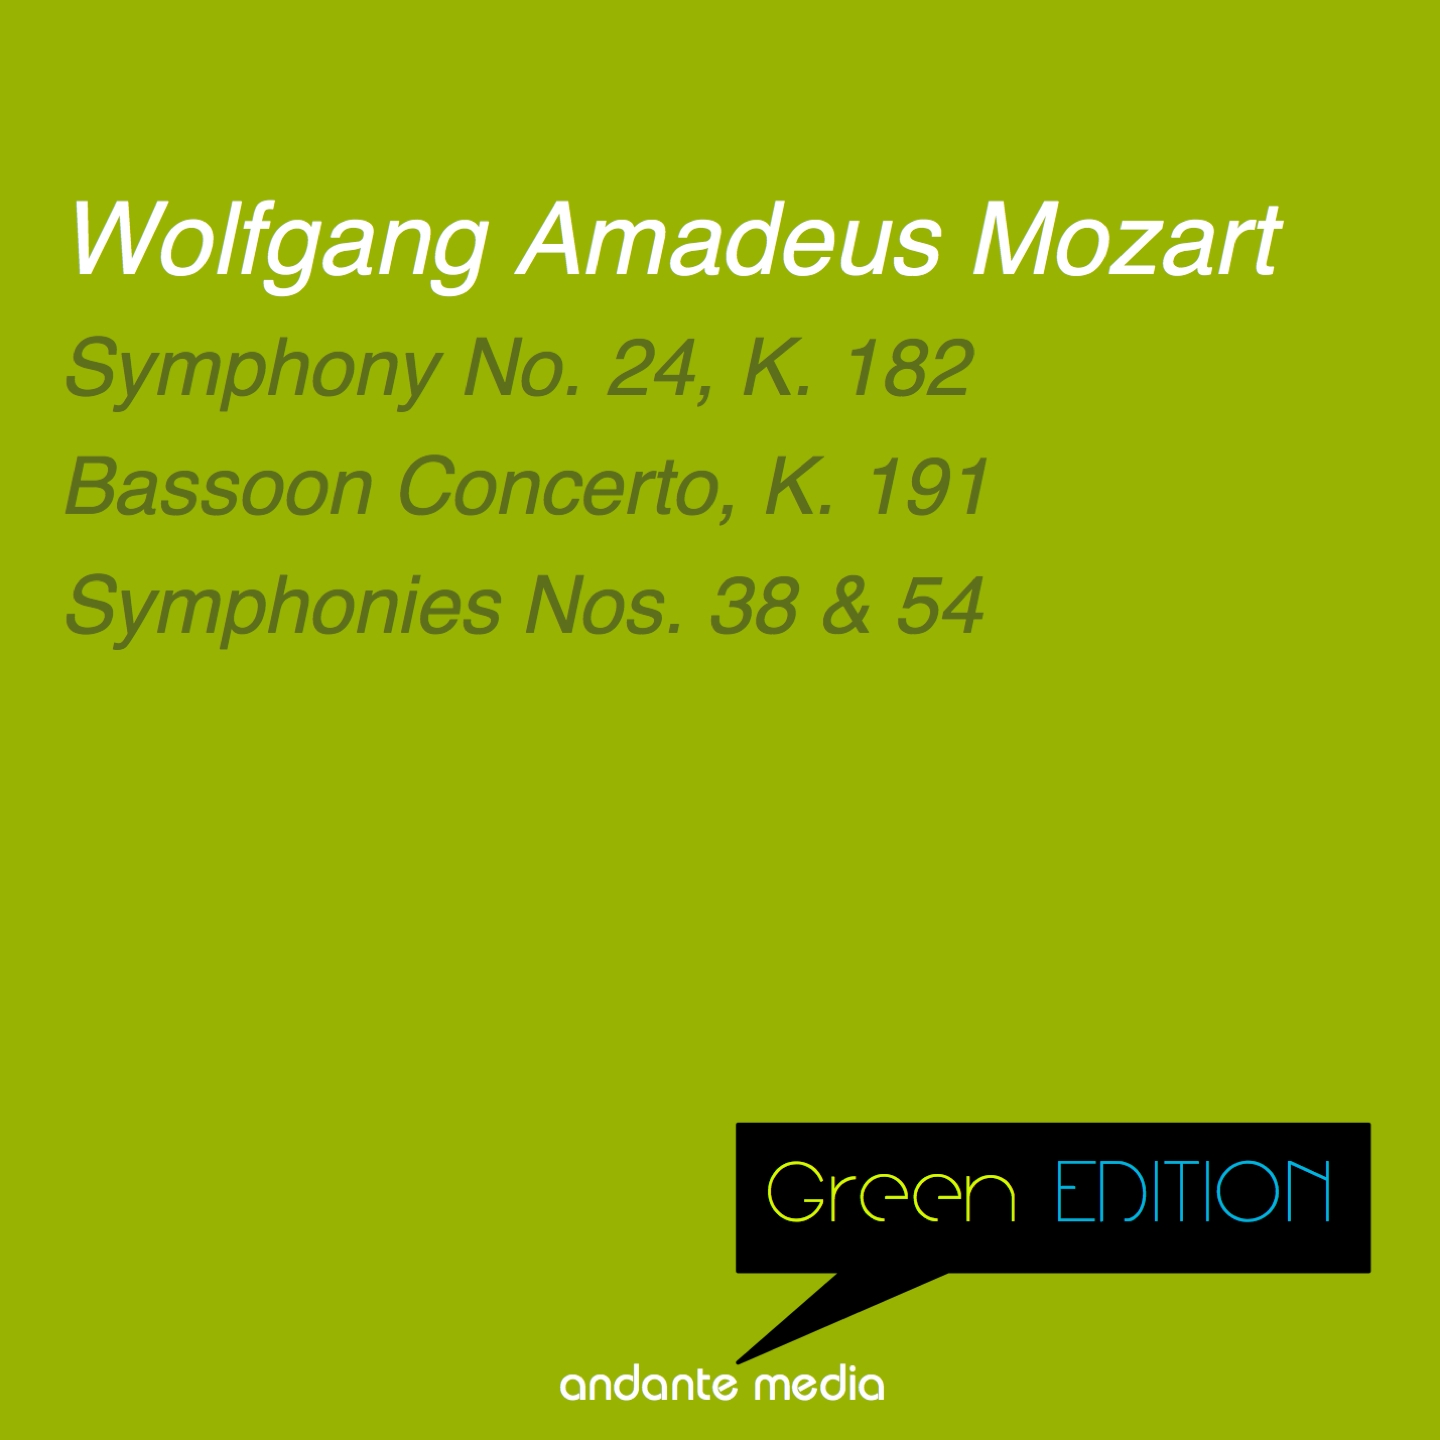 Green Edition - Mozart: Symphonies Nos. 24, 38, 54 & Bassoon Concerto, K. 191